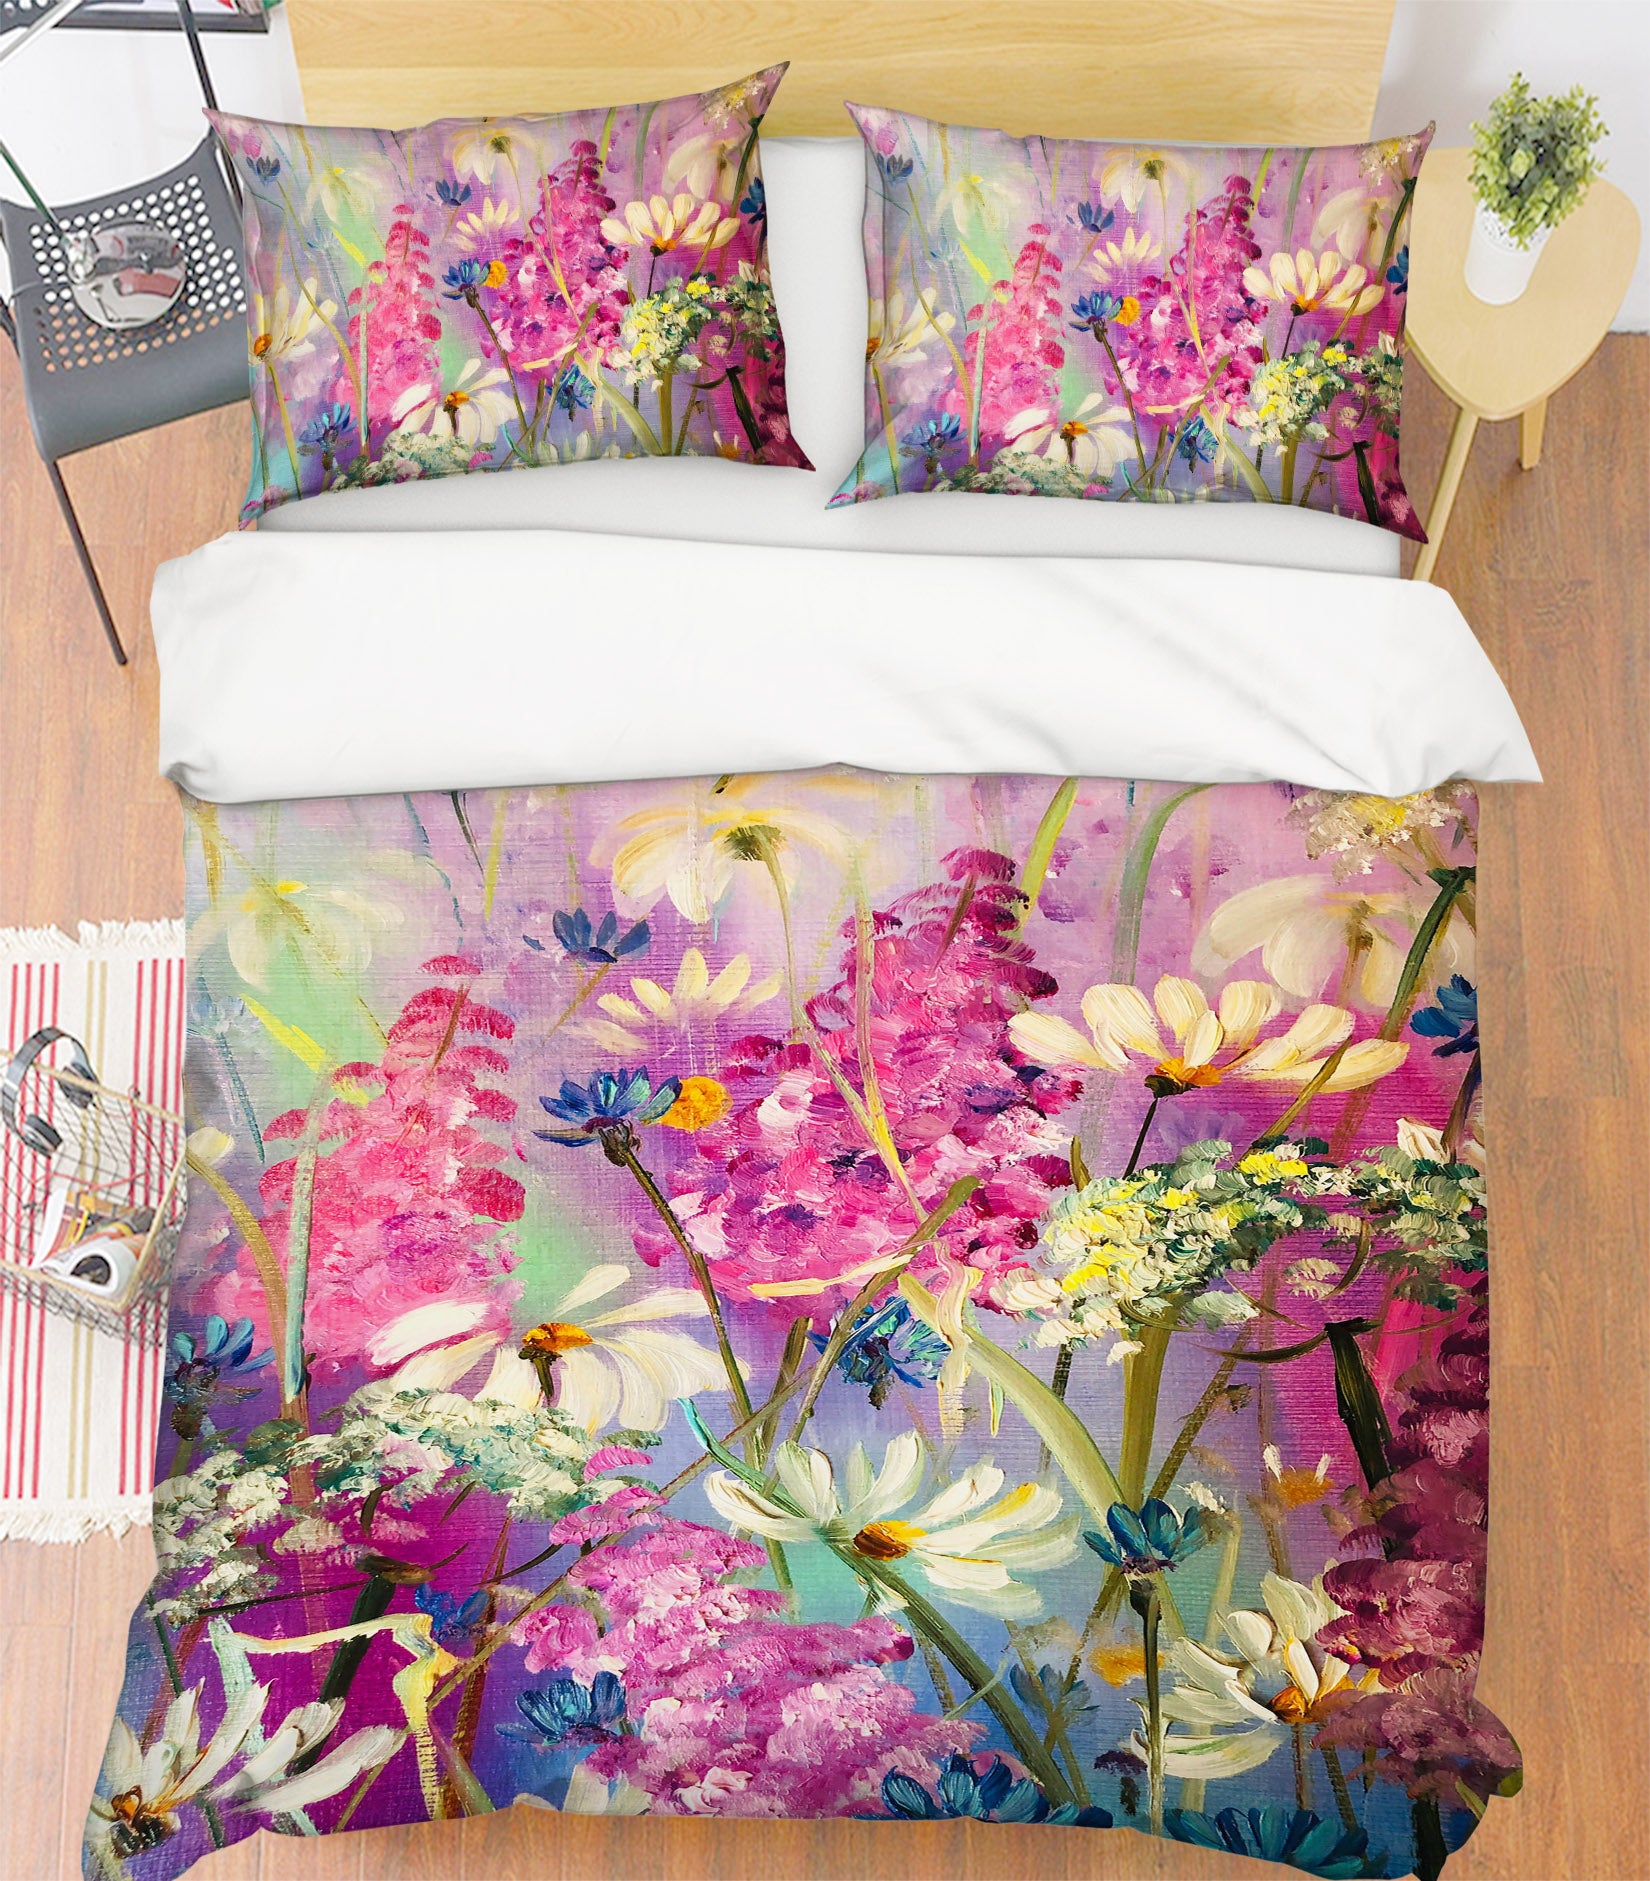 3D Flower Species 562 Skromova Marina Bedding Bed Pillowcases Quilt